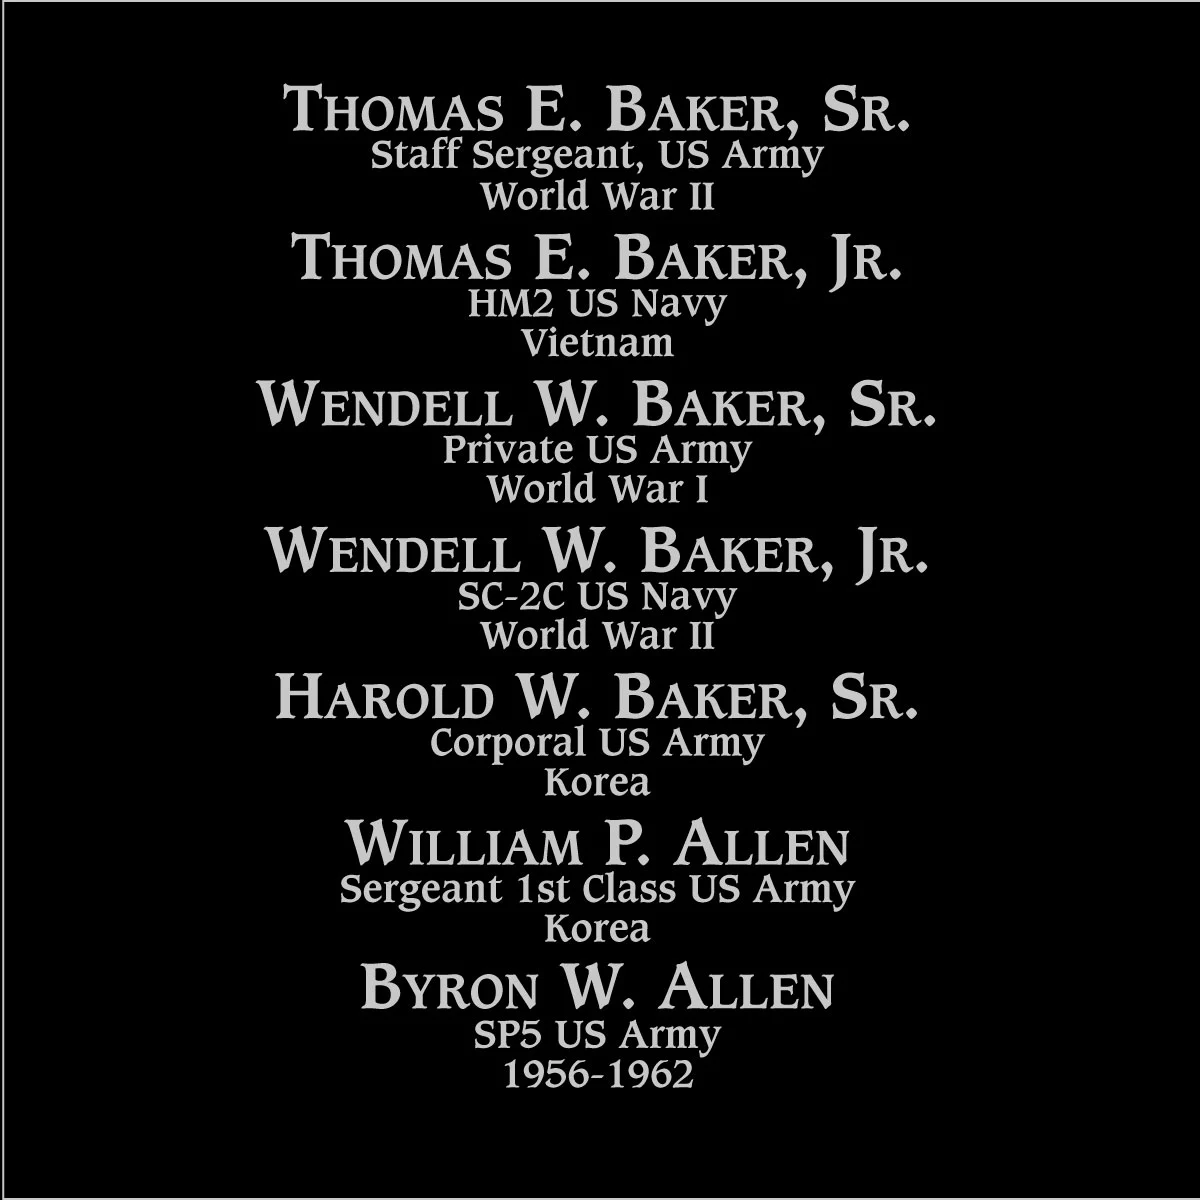 Thomas E. Baker jr